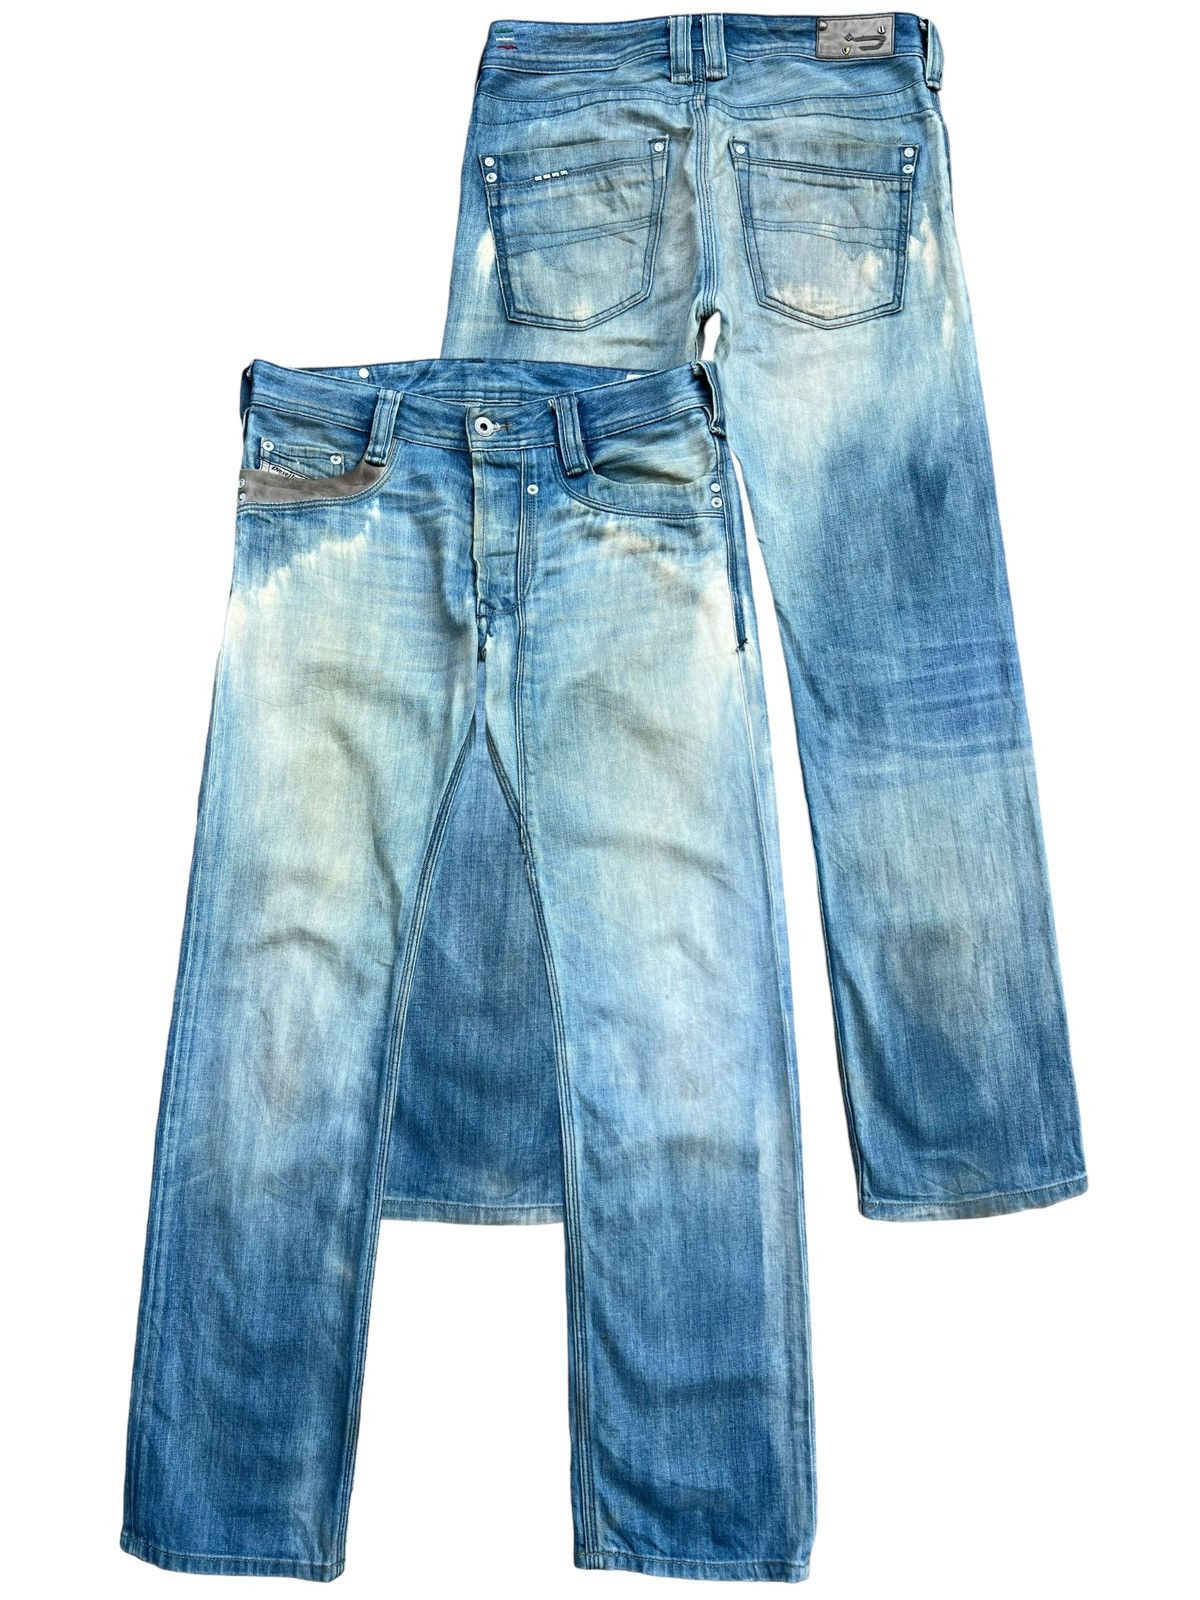 Vintage Diesel Leather Faded Distressed Denim Jeans 32x31 - 1